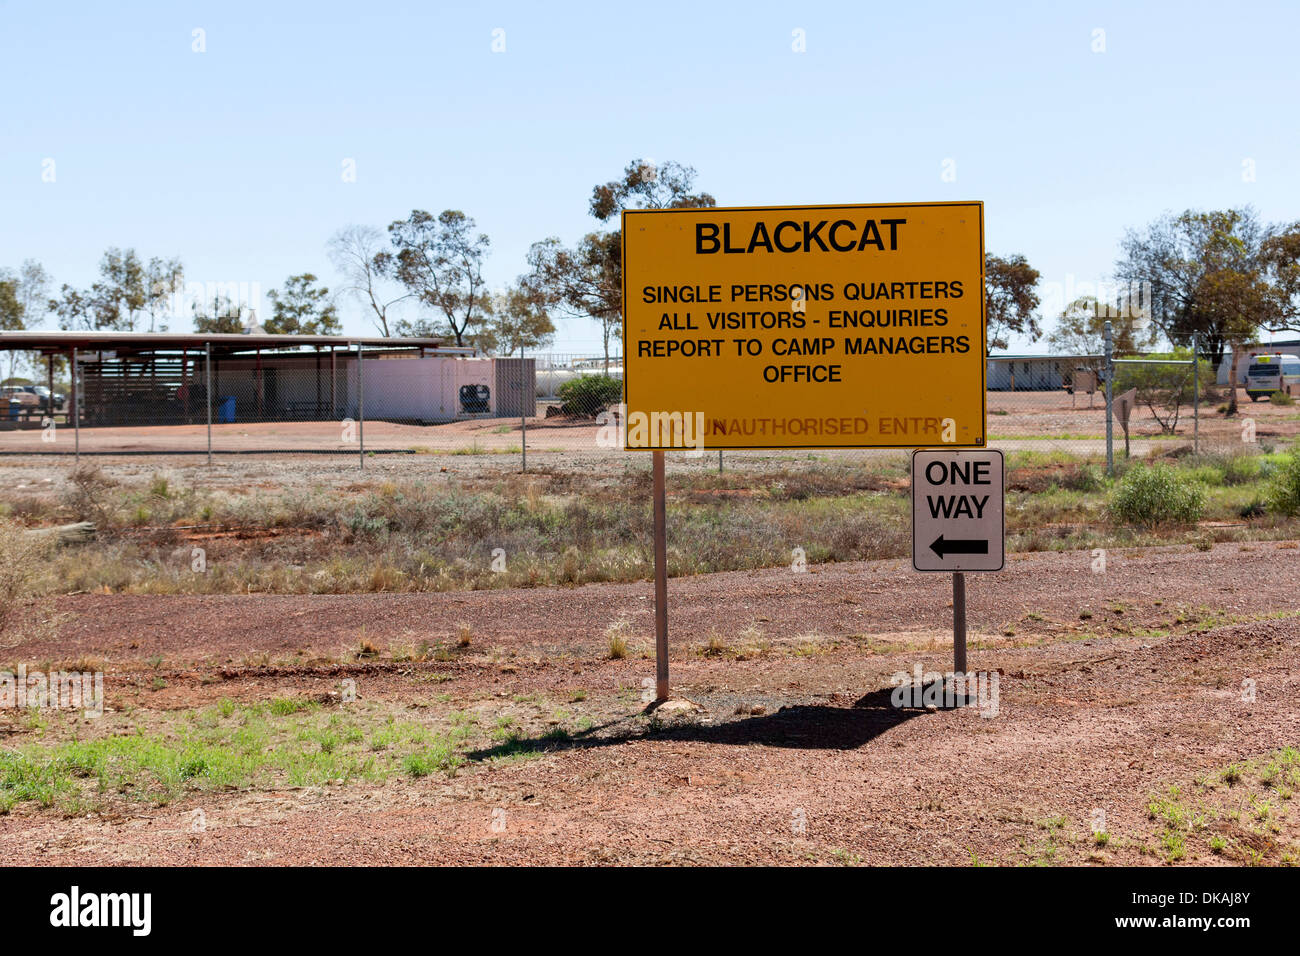 Blackcat single persons mining quarters, Mount Magnet Western Australia Stock Photo